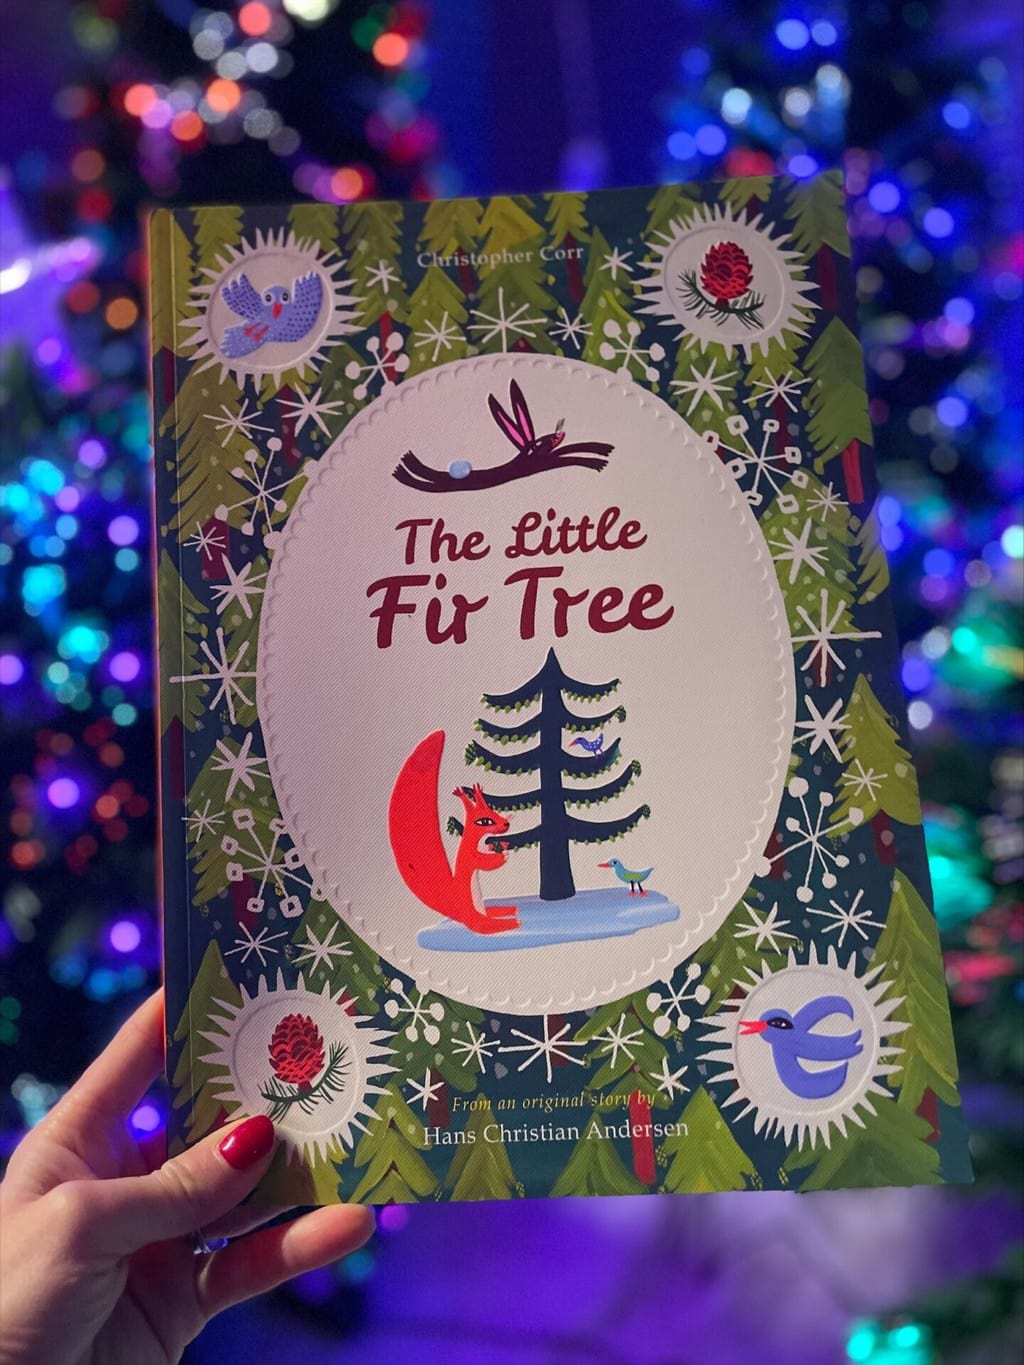 The Little Fir Tree – from the original story by Hans Christian Andersen, Christopher Corr (illustrator), Frances Lincoln Children’s Books (Quarto Group) (publisher)